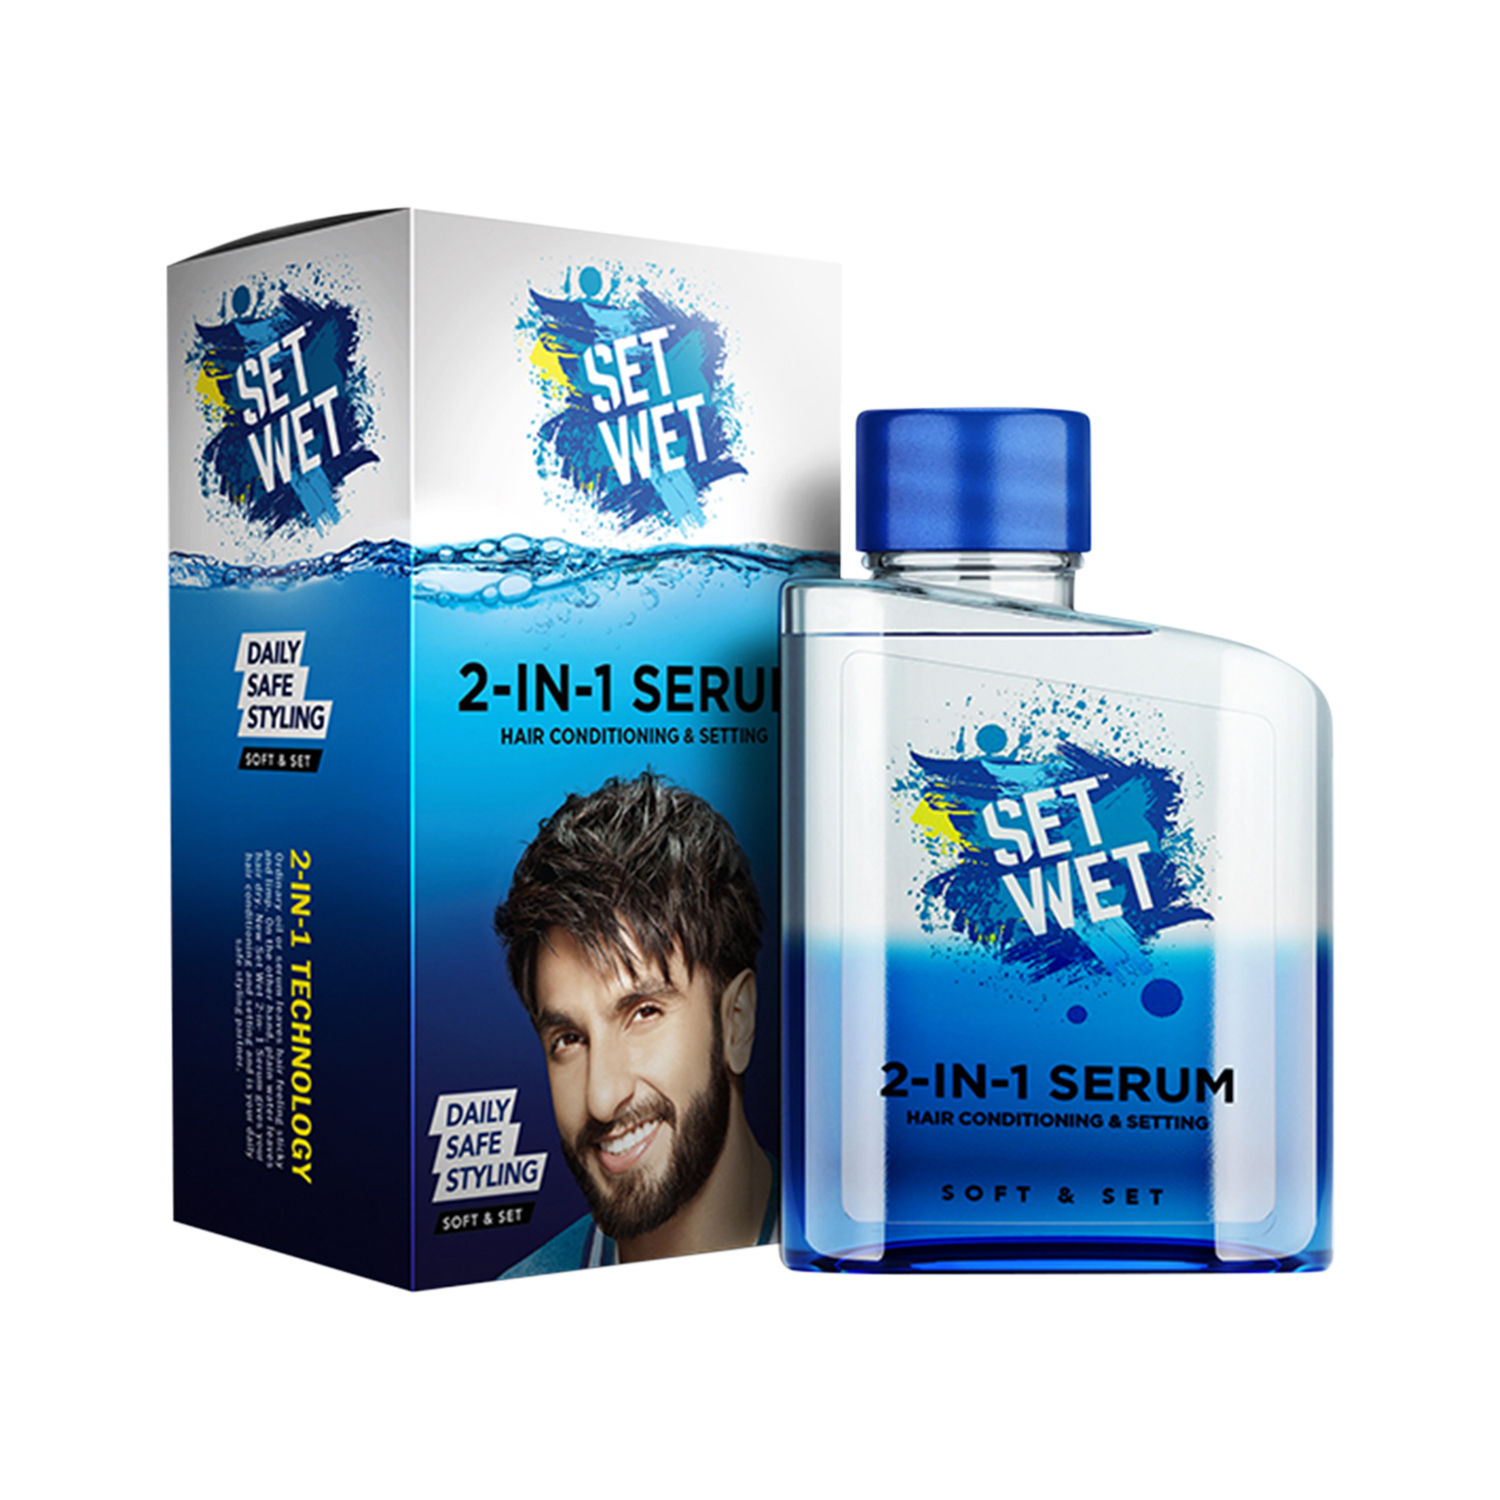 Set Wet 2-In-1 Serum, Soft & Set, ( 100 Ml) (Hair Serum For Men)